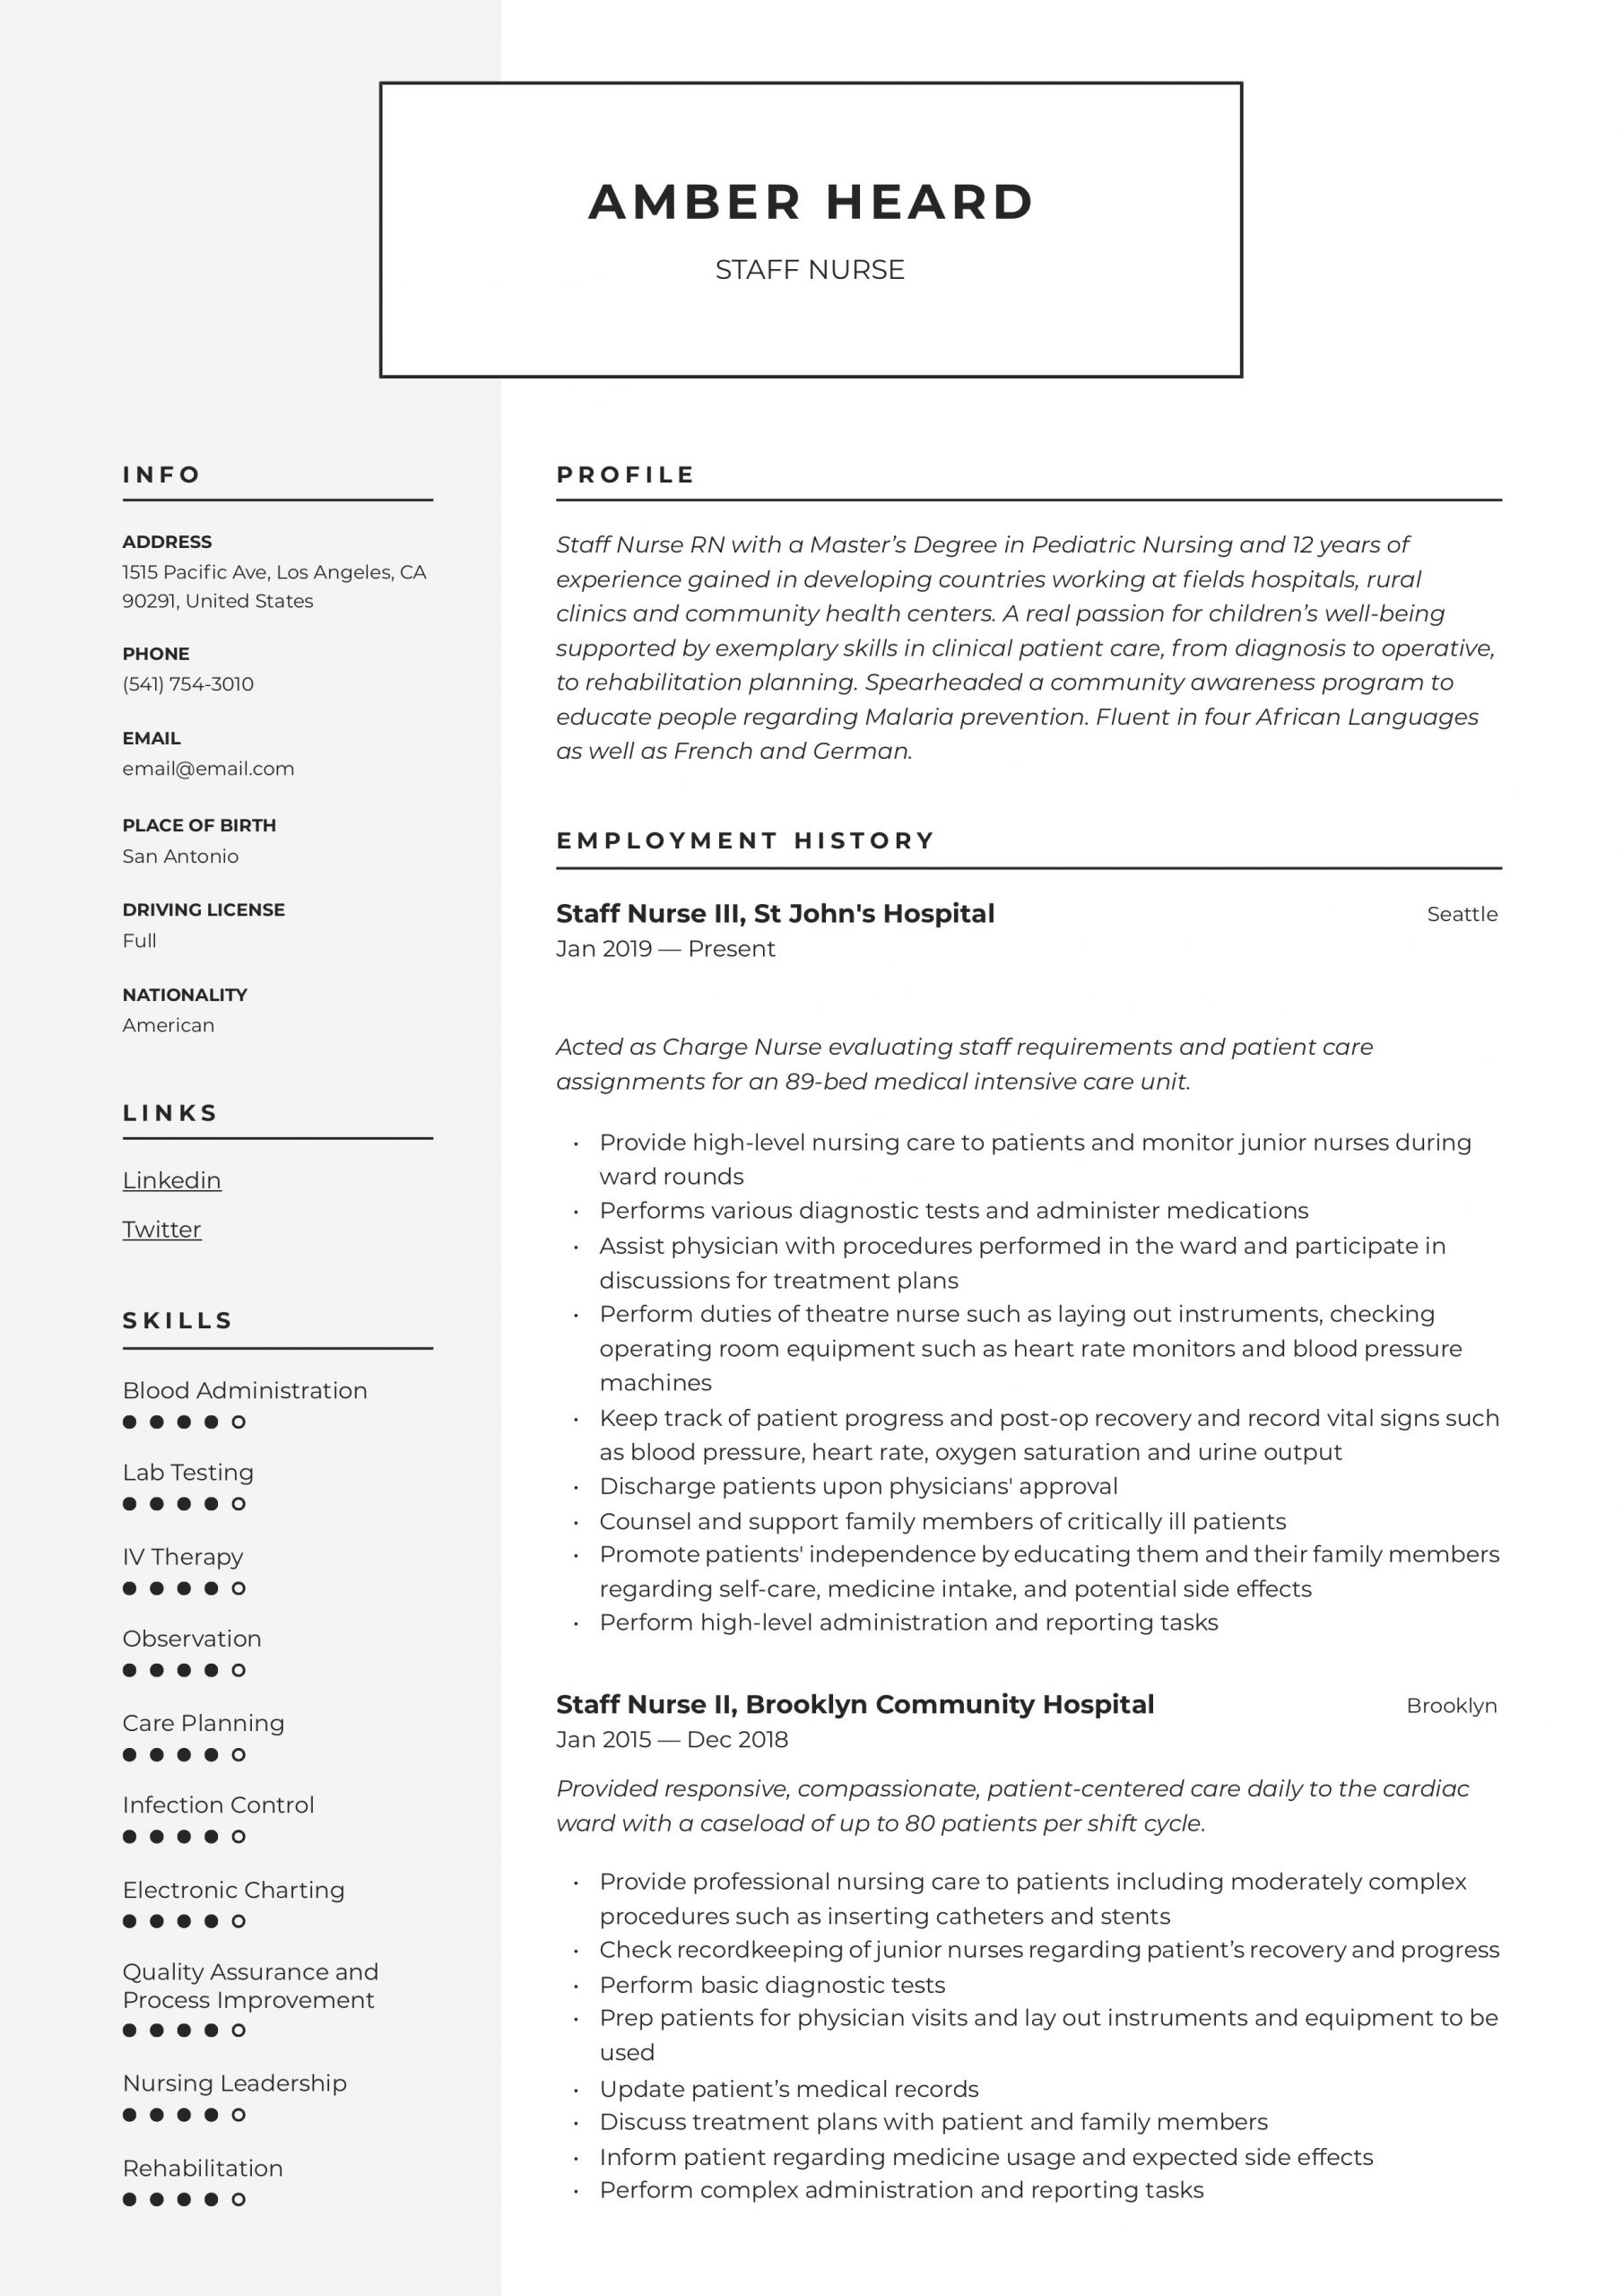 Sample Resume Of Staff Nurse with Job Description Staff Nurse Resume & Writing Guide  12 Templates In Pdf & Jpg 2020